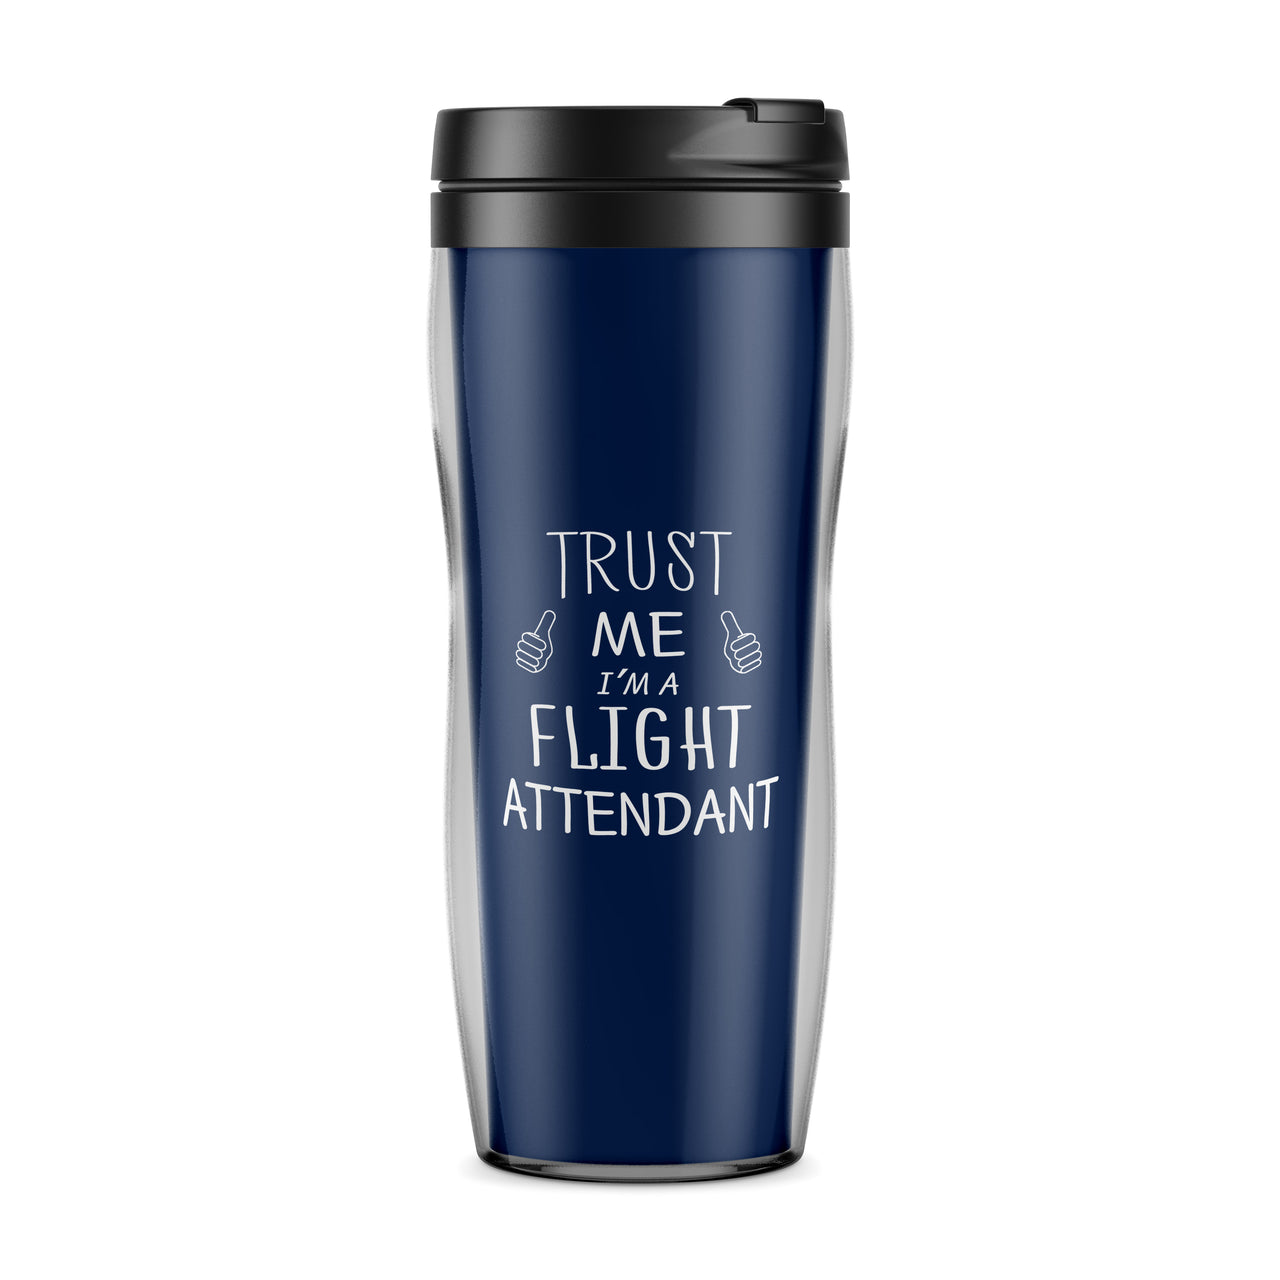 Trust Me I'm a Flight Attendant Designed Travel Mugs